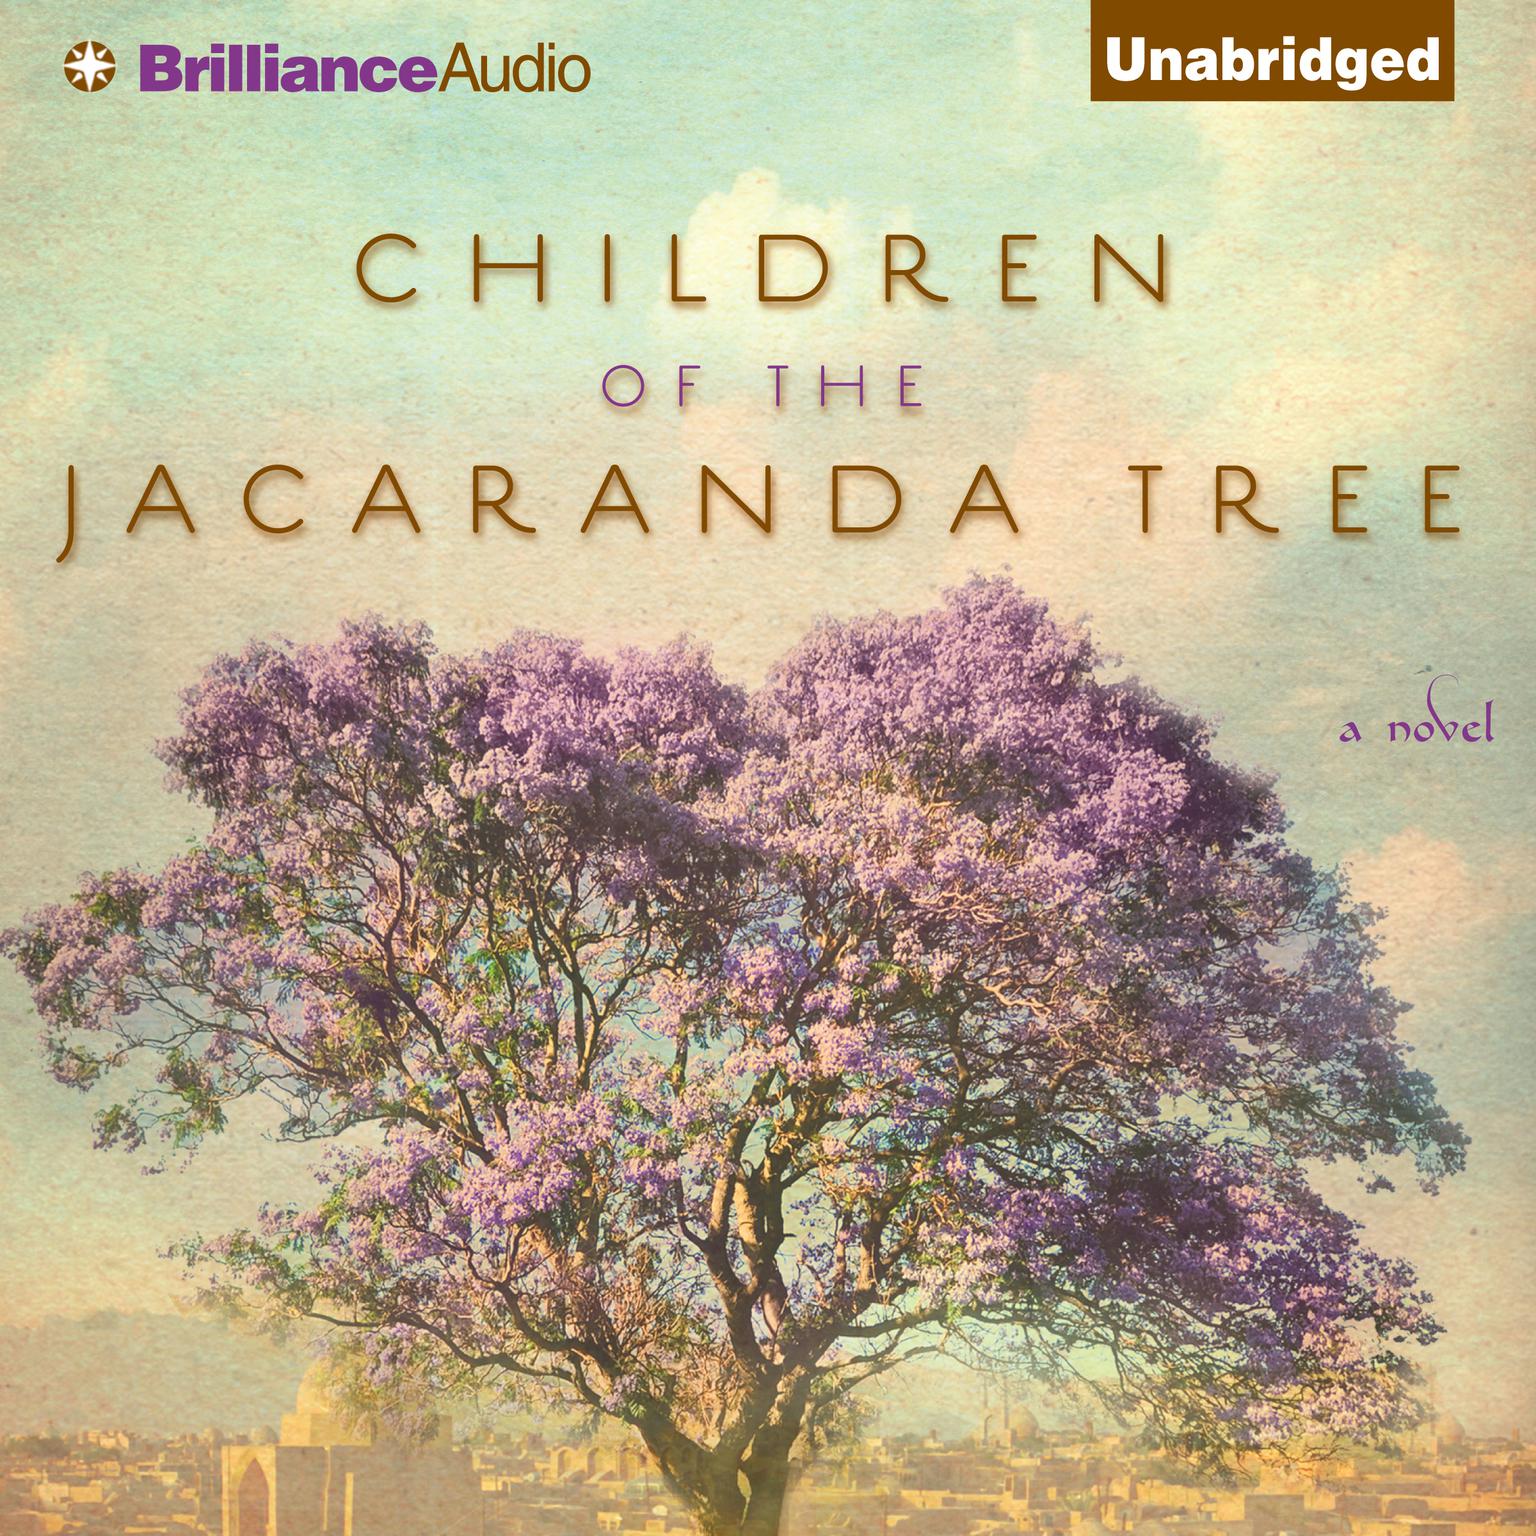 Children of the Jacaranda Tree Audiobook, by Sahar Delijani